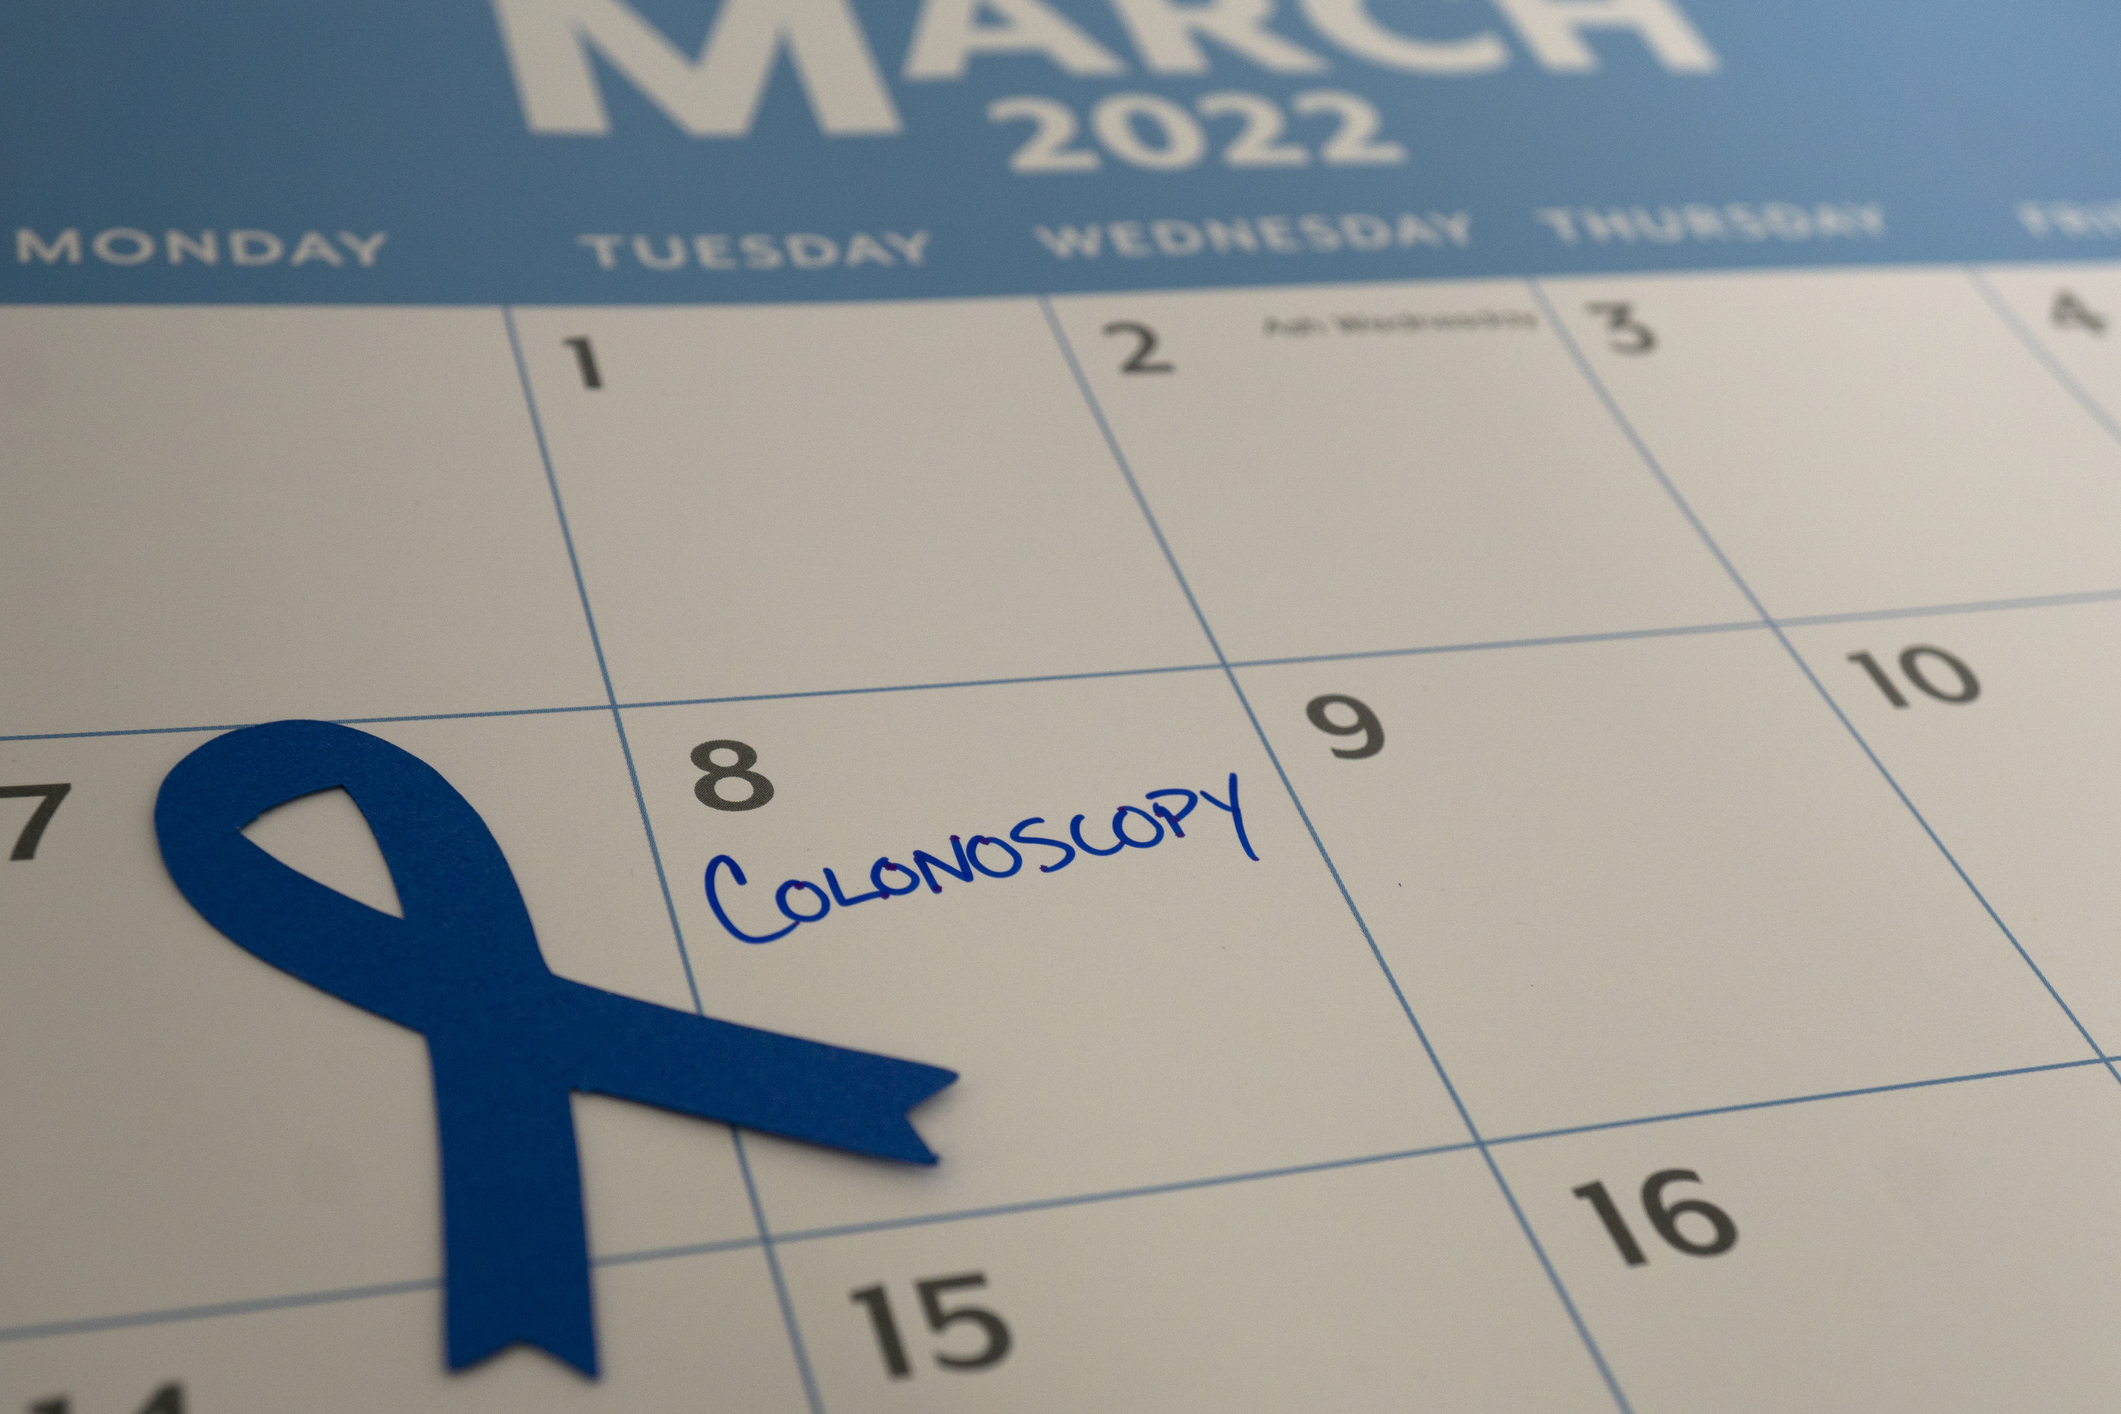 Colonoscopy exam scheduled on a calendar